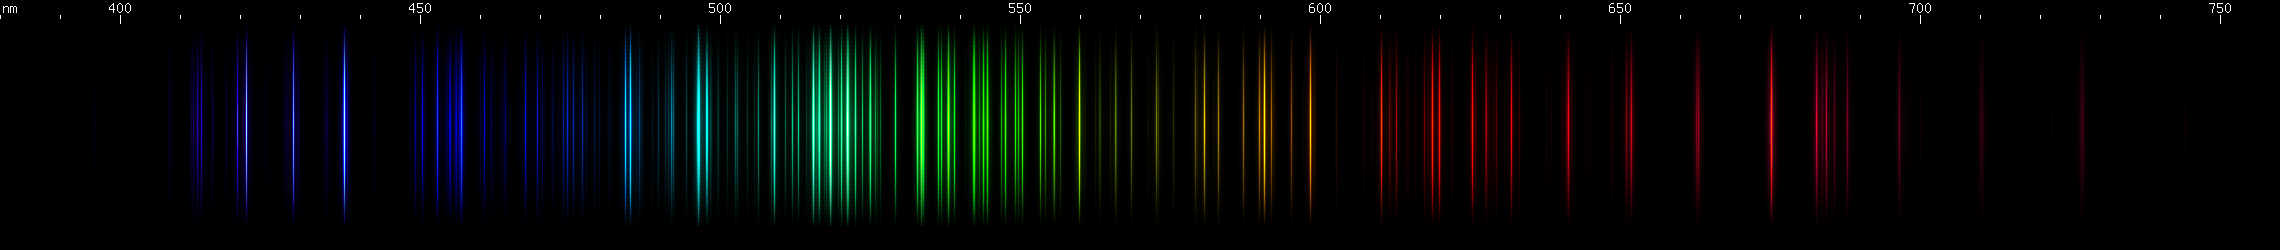 Spectral Lines of Rhodium